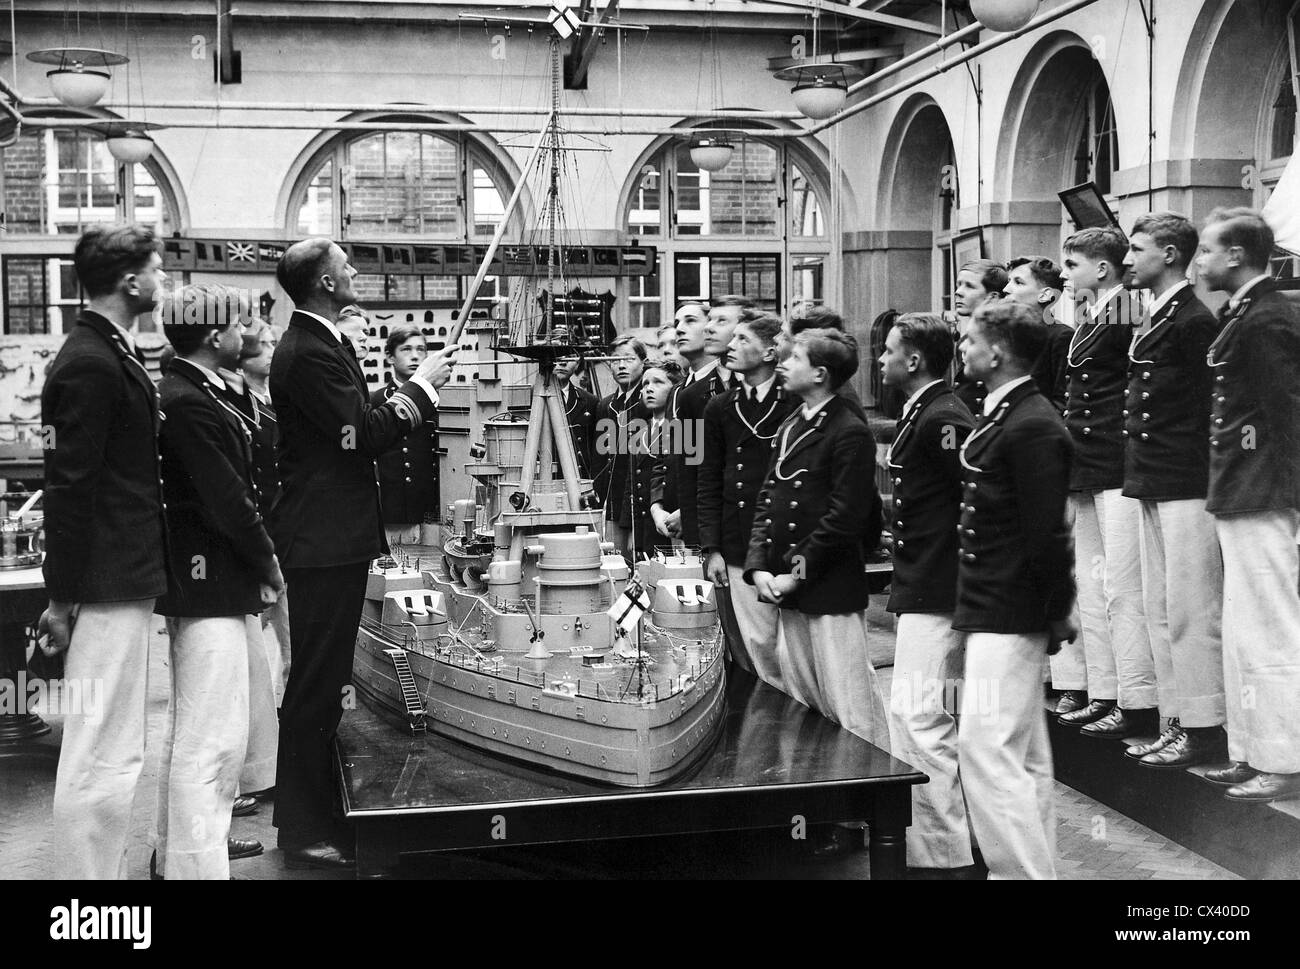 Royal Navy World War Two or inter war. Royal Navy officer cadets under training. Stock Photo